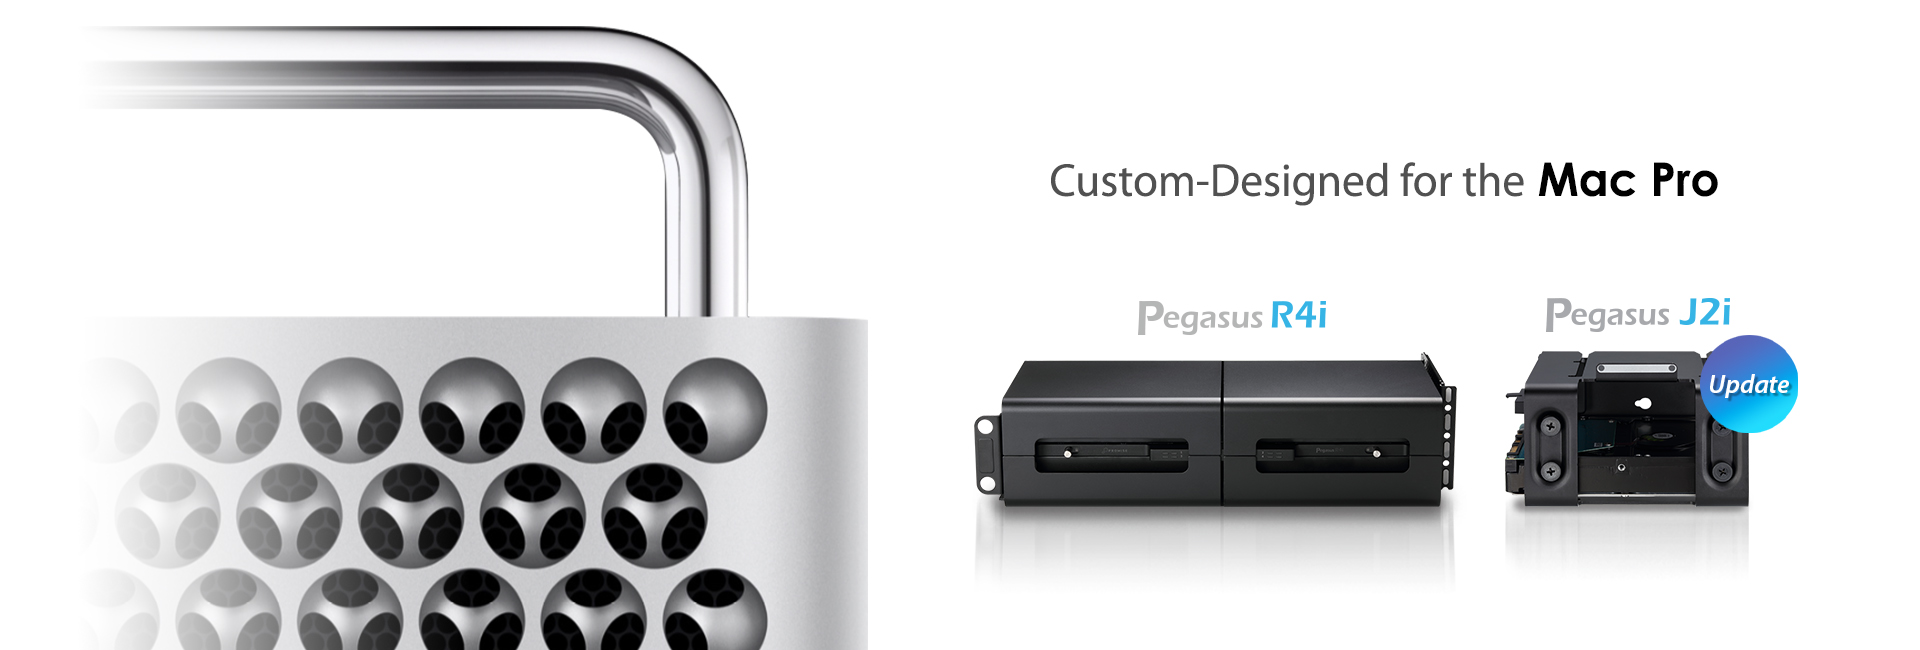 PROMISE Technology - Storage Solutions for IT, Cloud, Surveillance